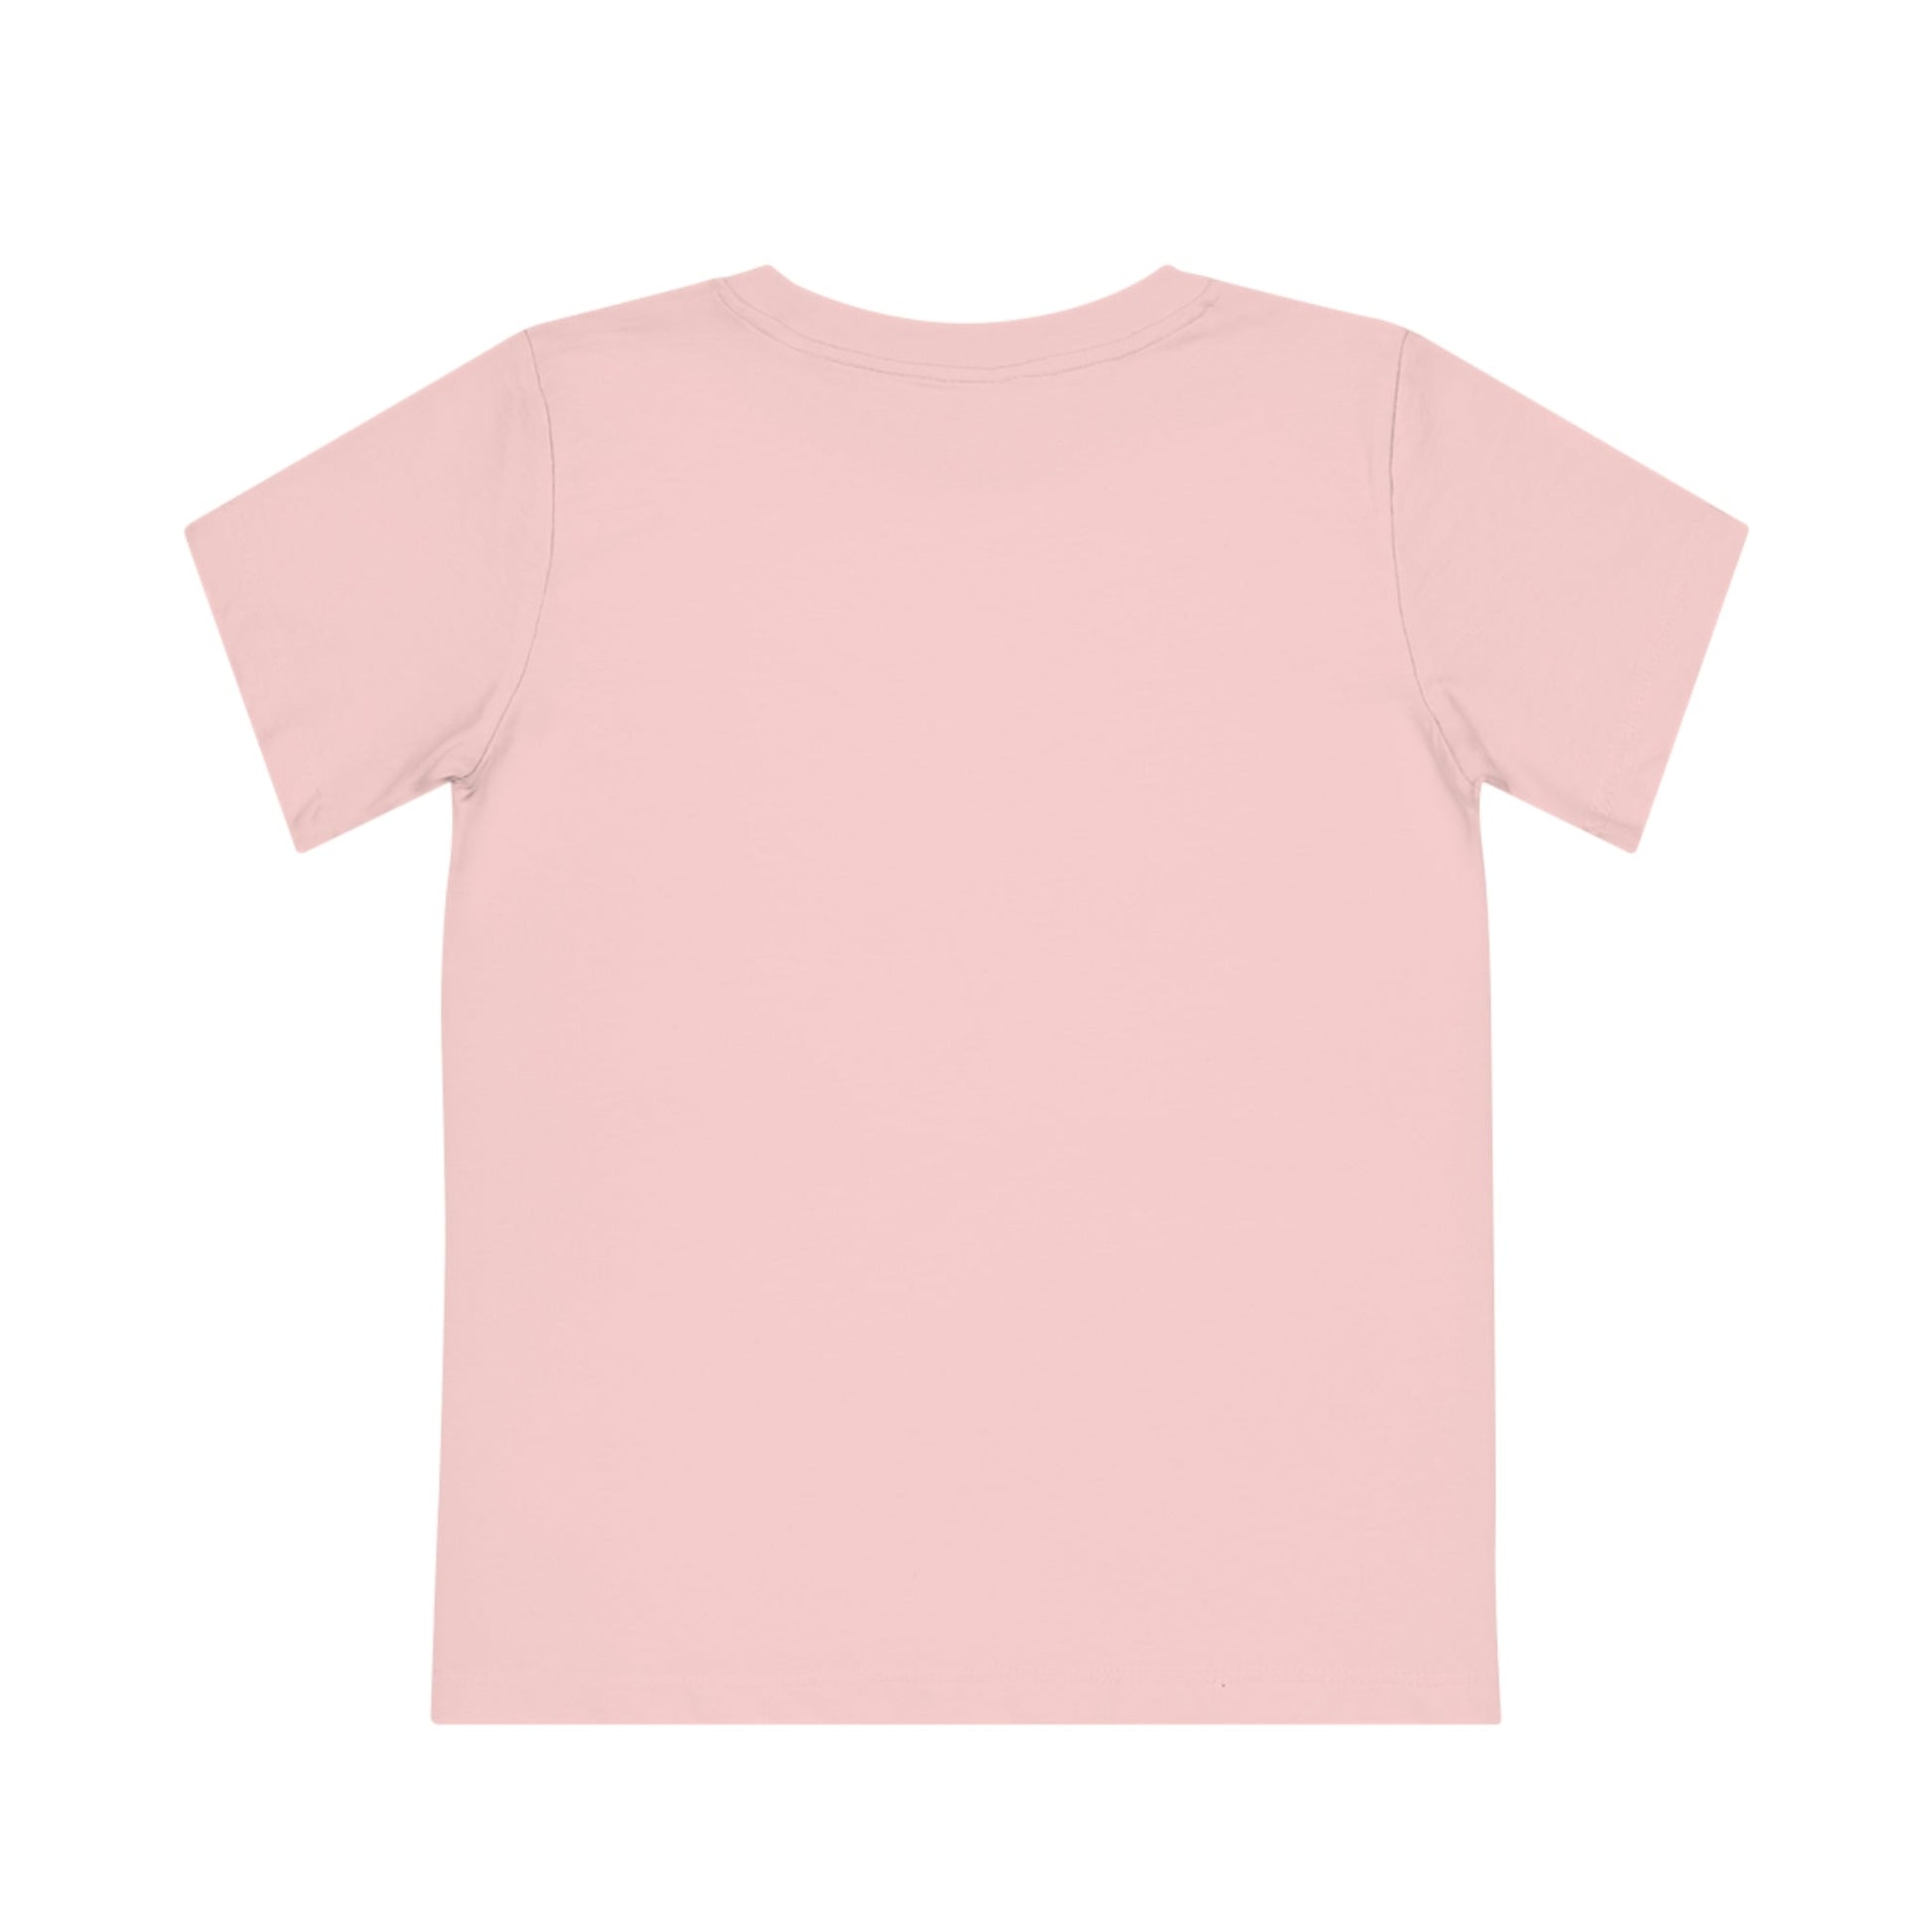 Kids Colorful Kindergarten Graduate 2023 Short Sleeve Cotton T-Shirt - numonet